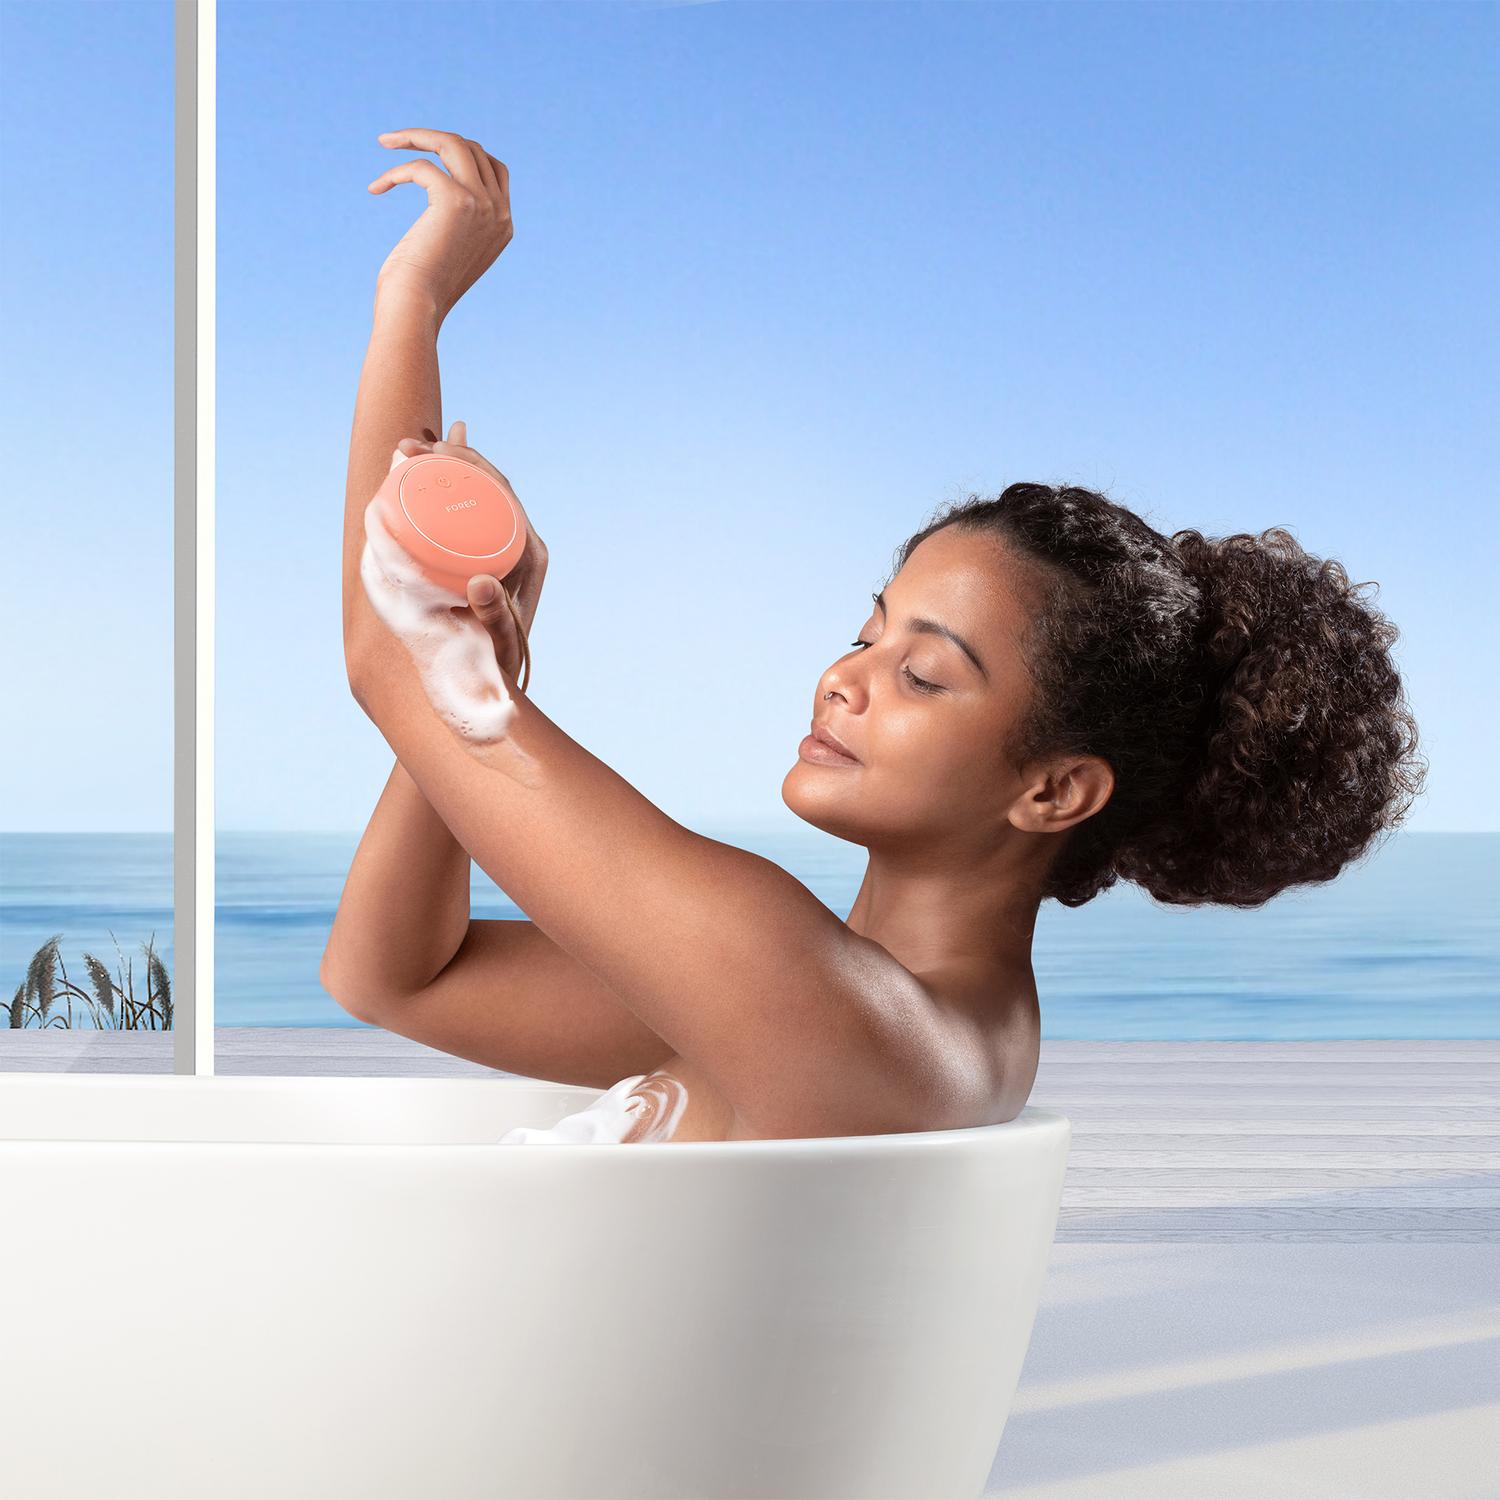 Selected image for FOREO LUNA 4 Body Peach Perfect Pametni sonični uređaj i masažer za čišćenje tela